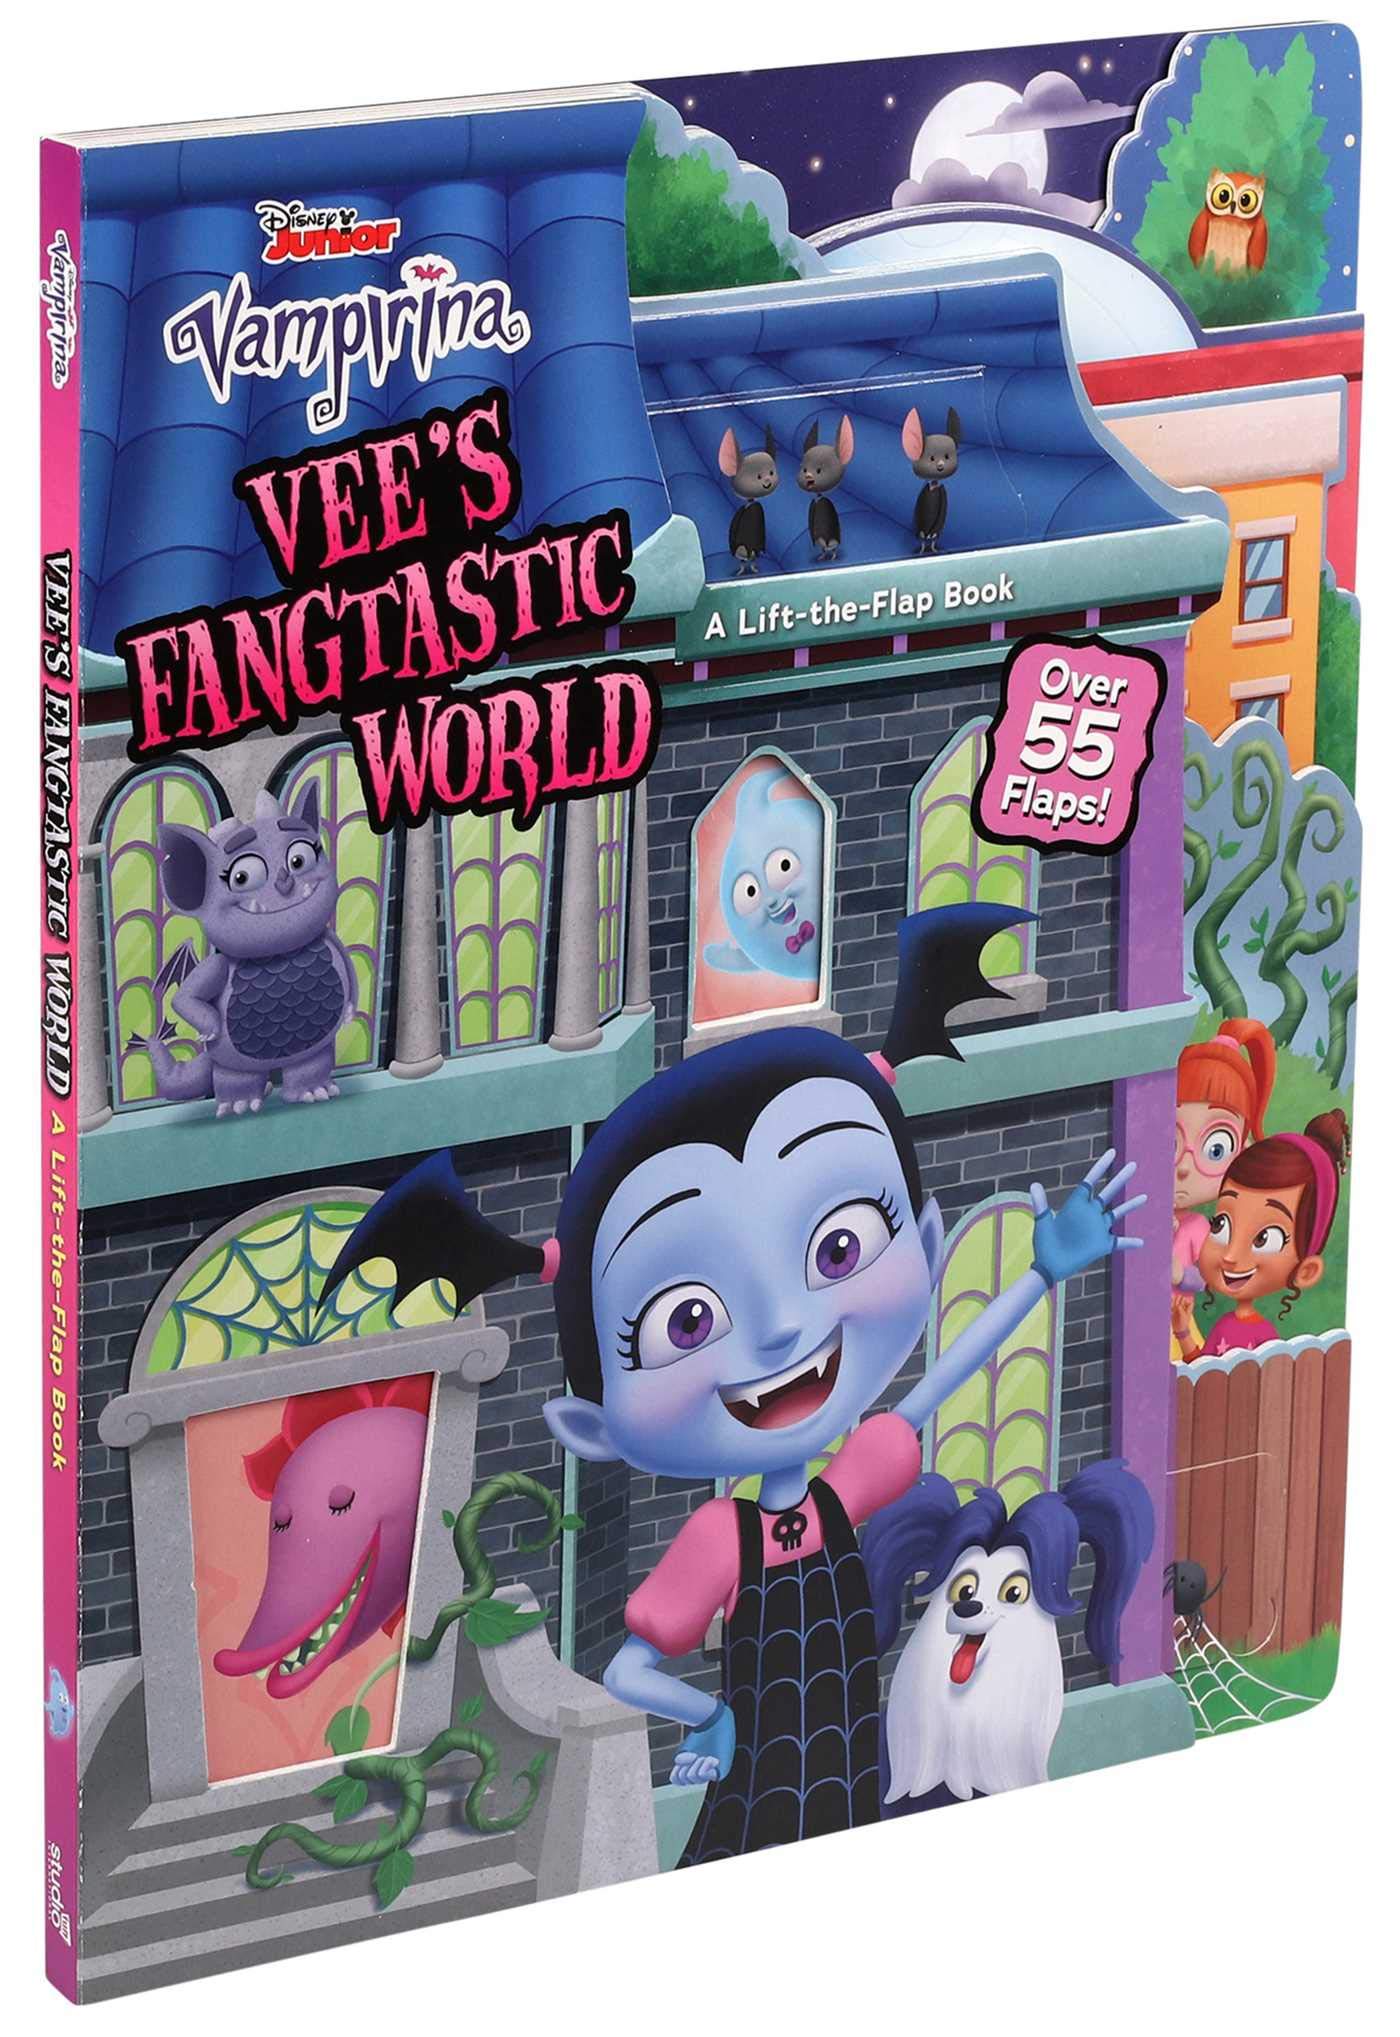 Disney Vampirina: Vee's Fangtastic World Lift-the-Flap